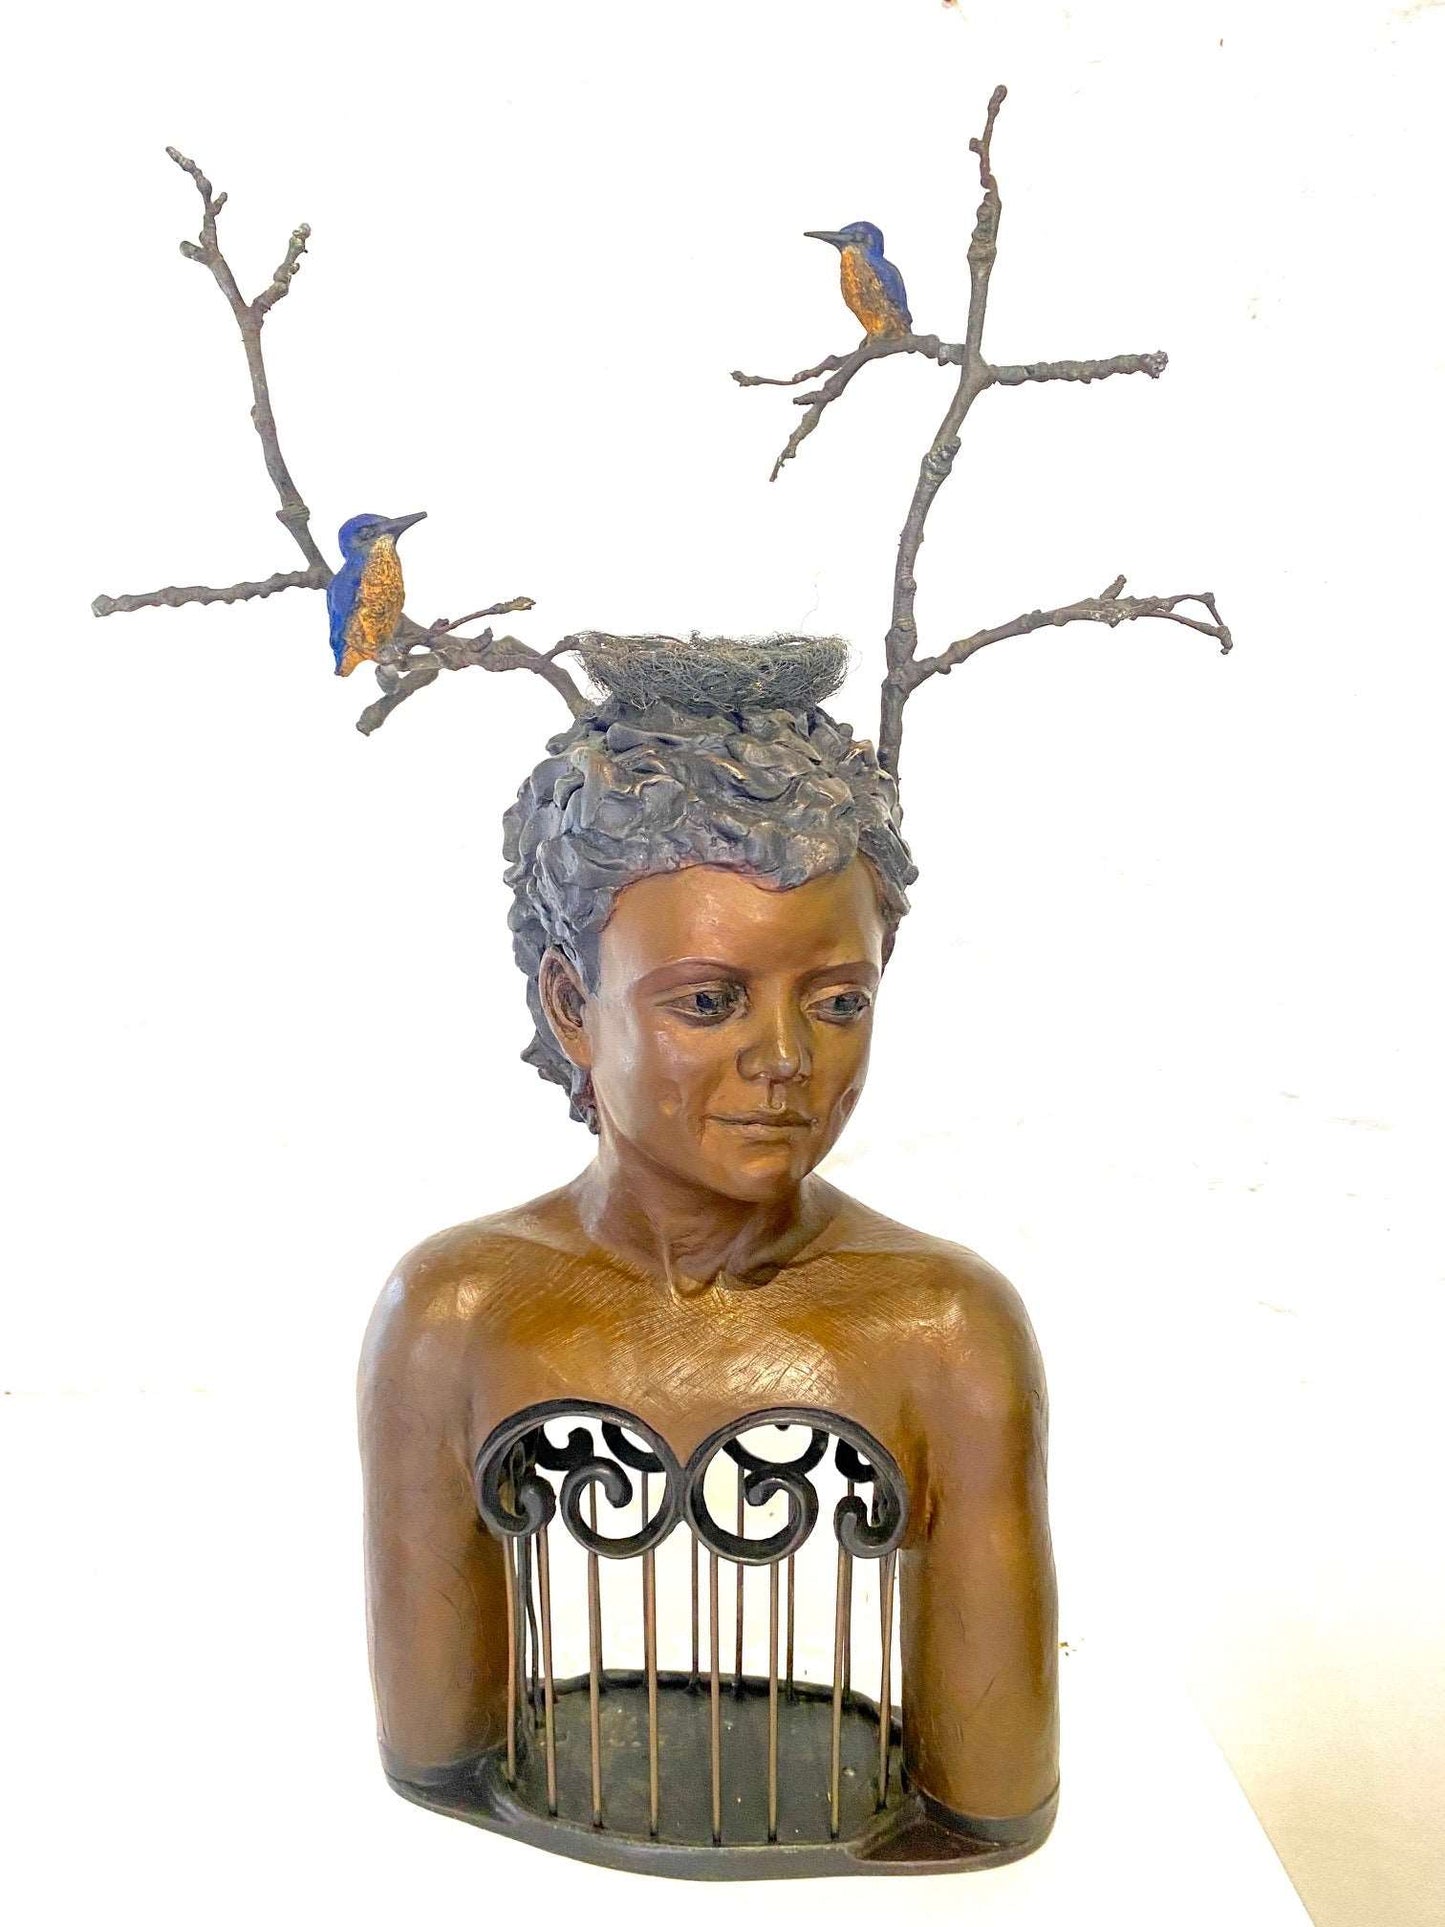 Birdcage Girl: Hope, Dreams, Freedom Maritza Breitenbach Sculpture JULIE MILLER AFRICAN CONTEMPORARY